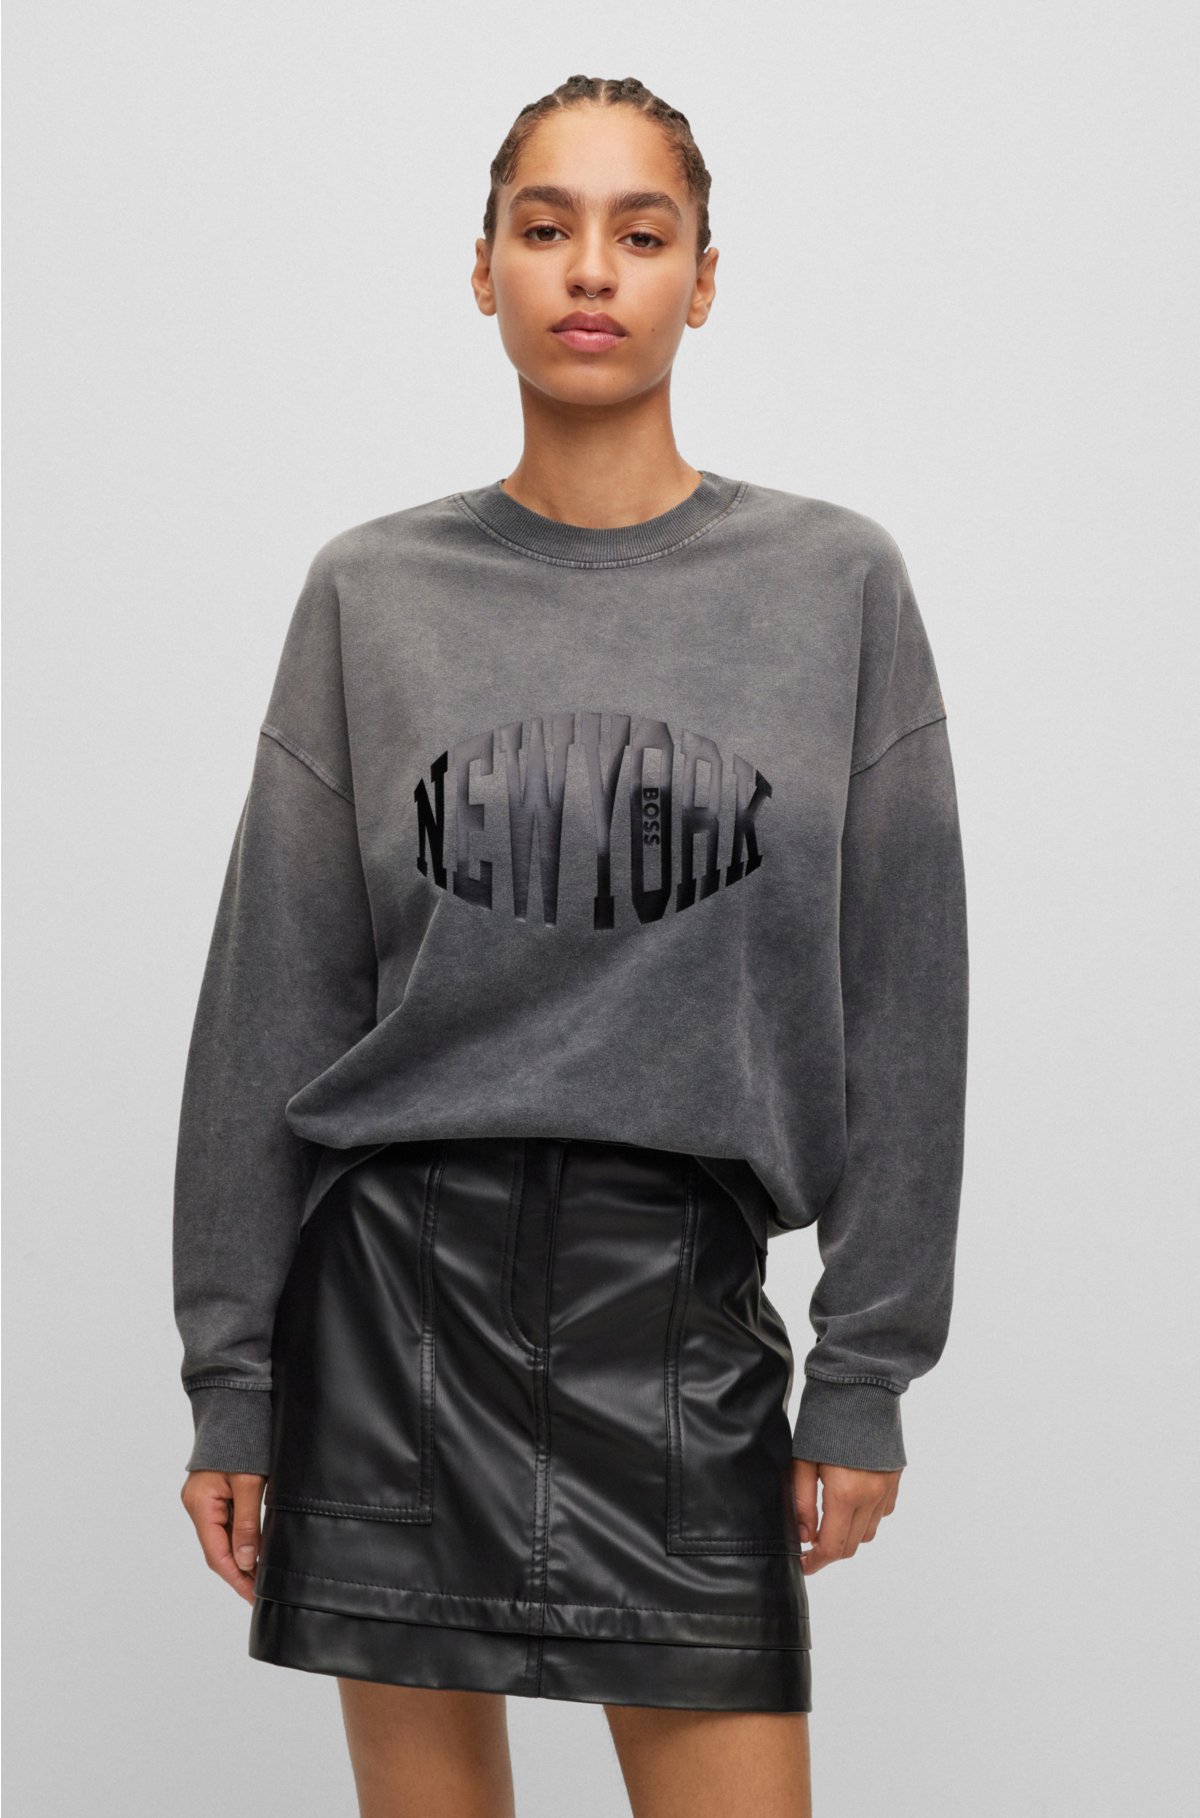 Sweatshirt Brandy Melville Black size XS International in Cotton